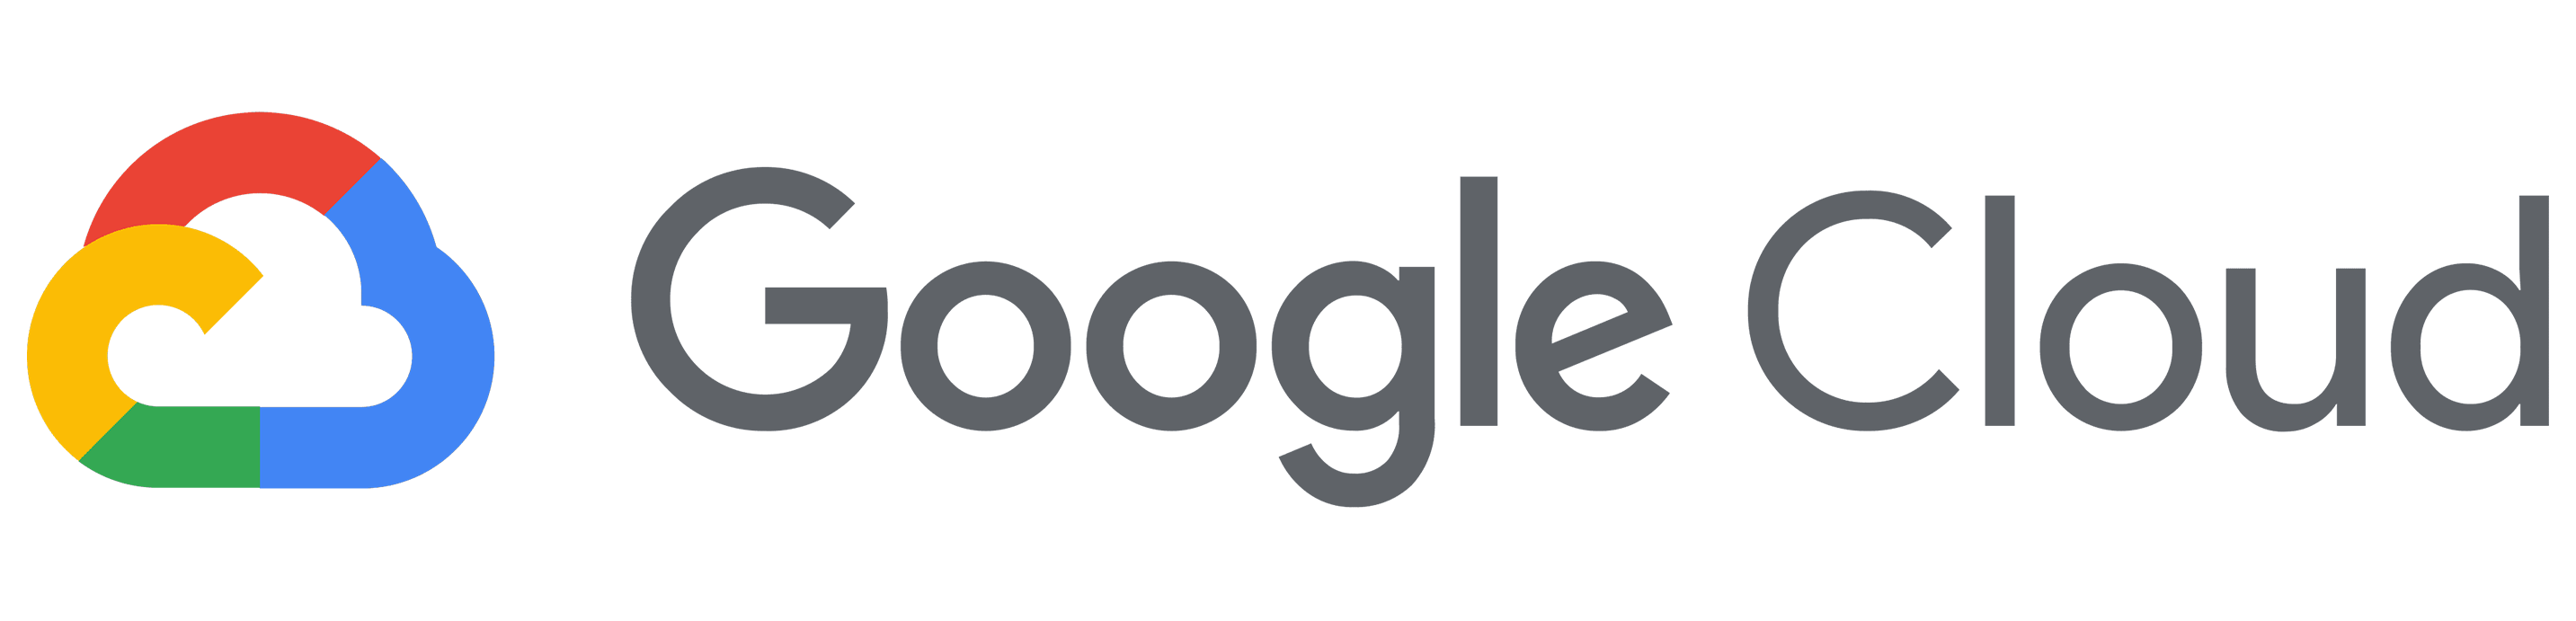 Gaas-Slider_Logo_Google_Cloud_tb_v1.1